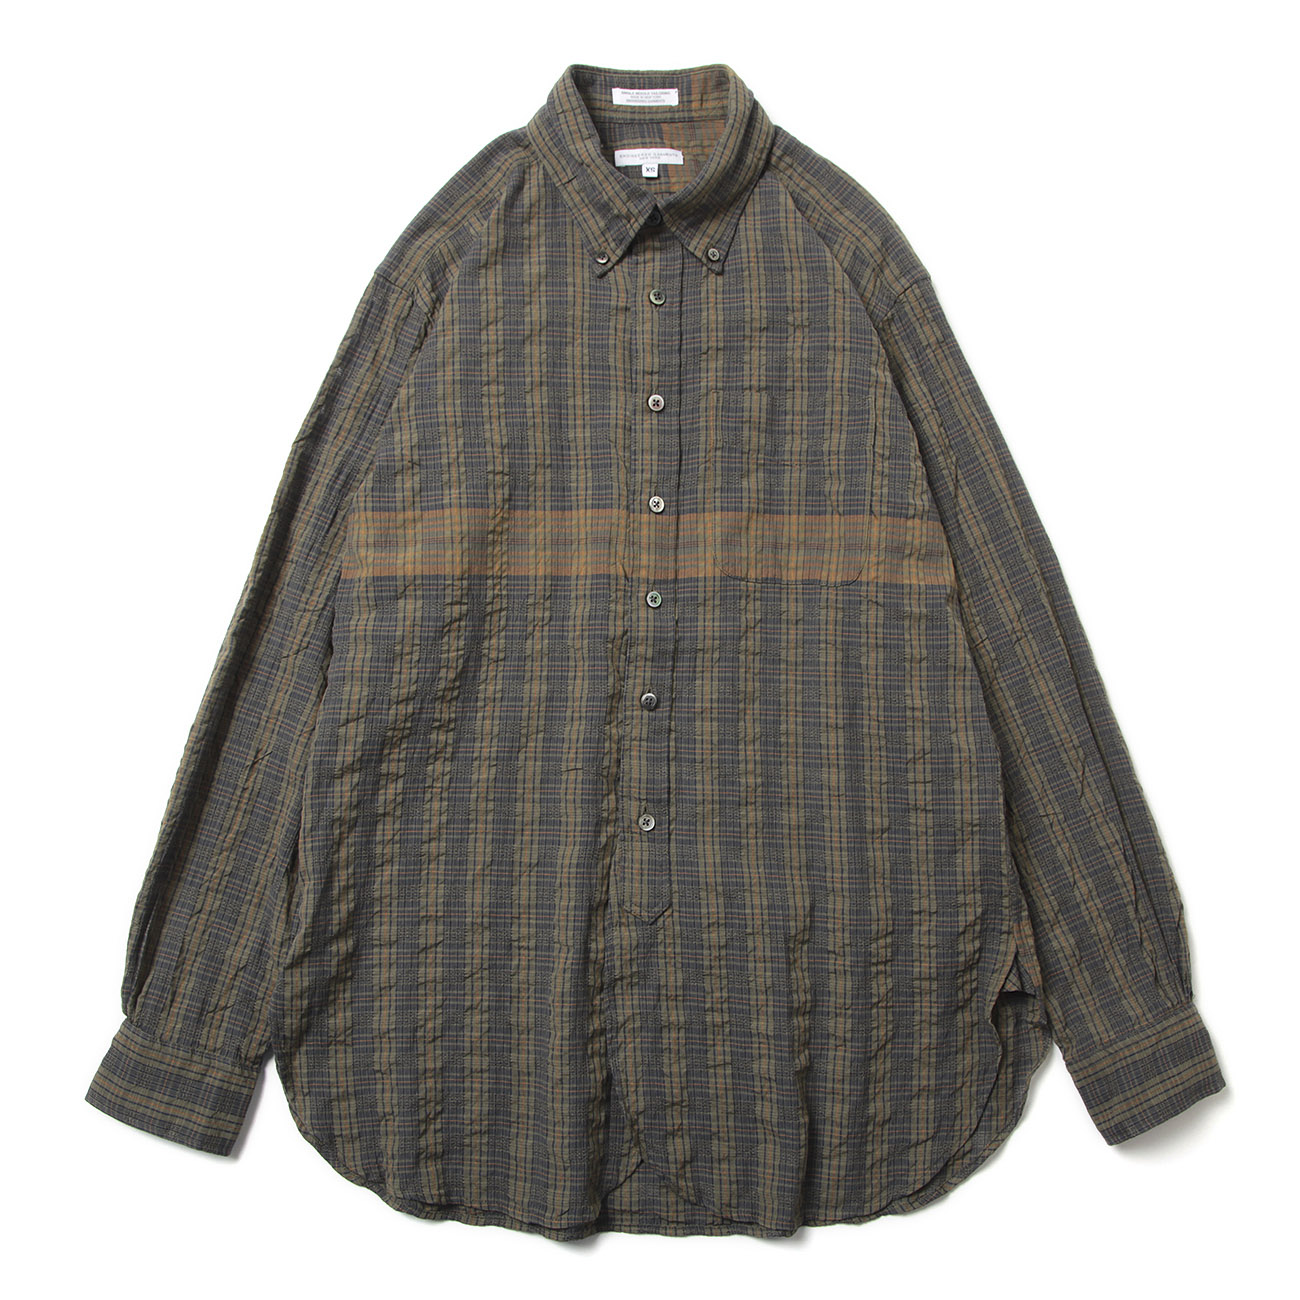 19 Century BD Shirt - Small Seersucker Plaid - Olive